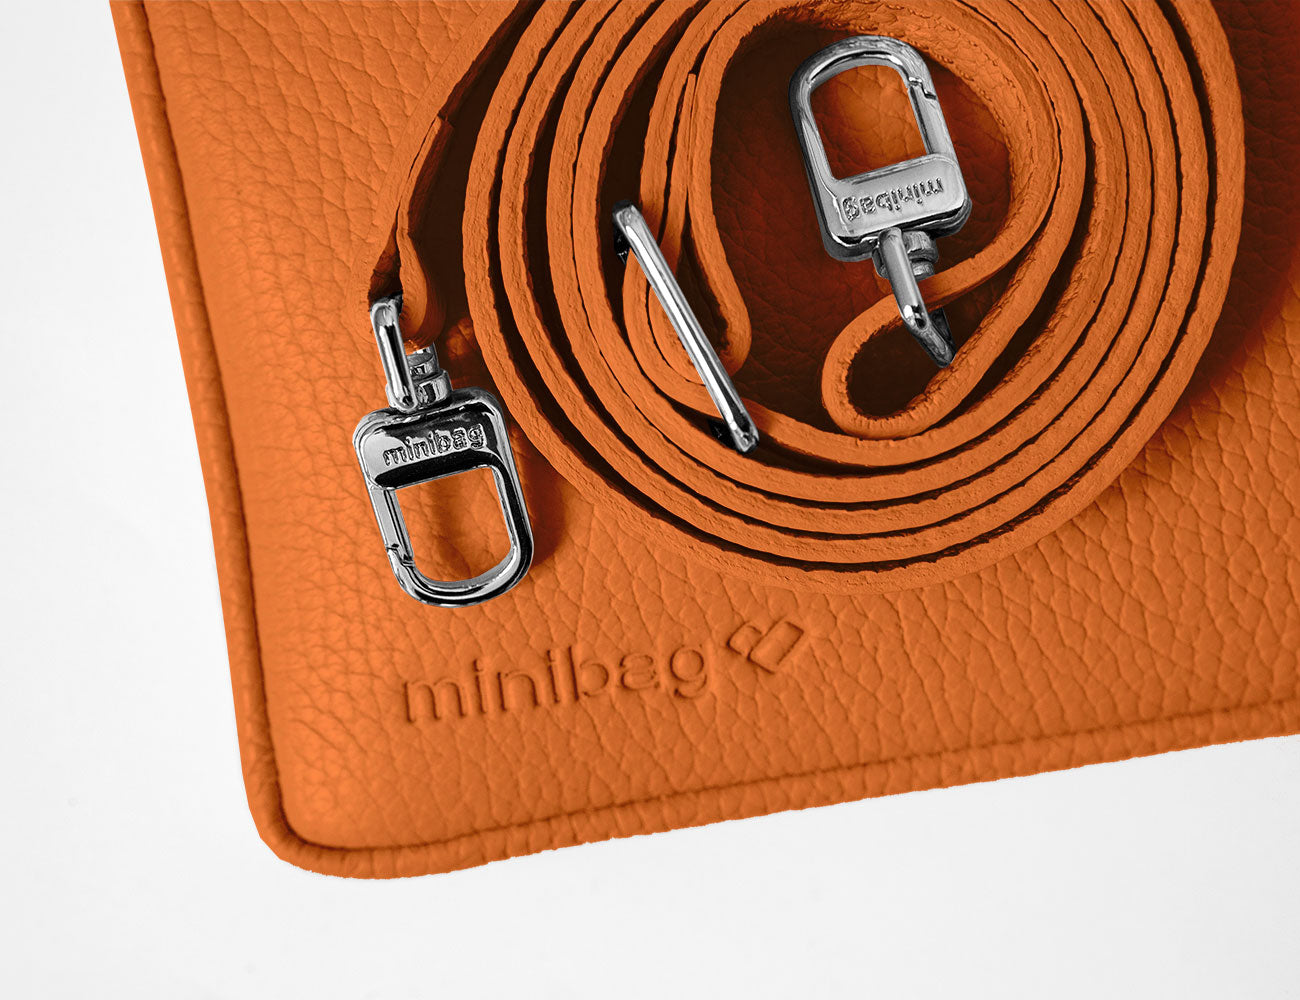 minibag orange, Ledertasche orange, Clutch orange, Detailaufnahme minibag, Ledergurt orange, minibag  Edit alt text